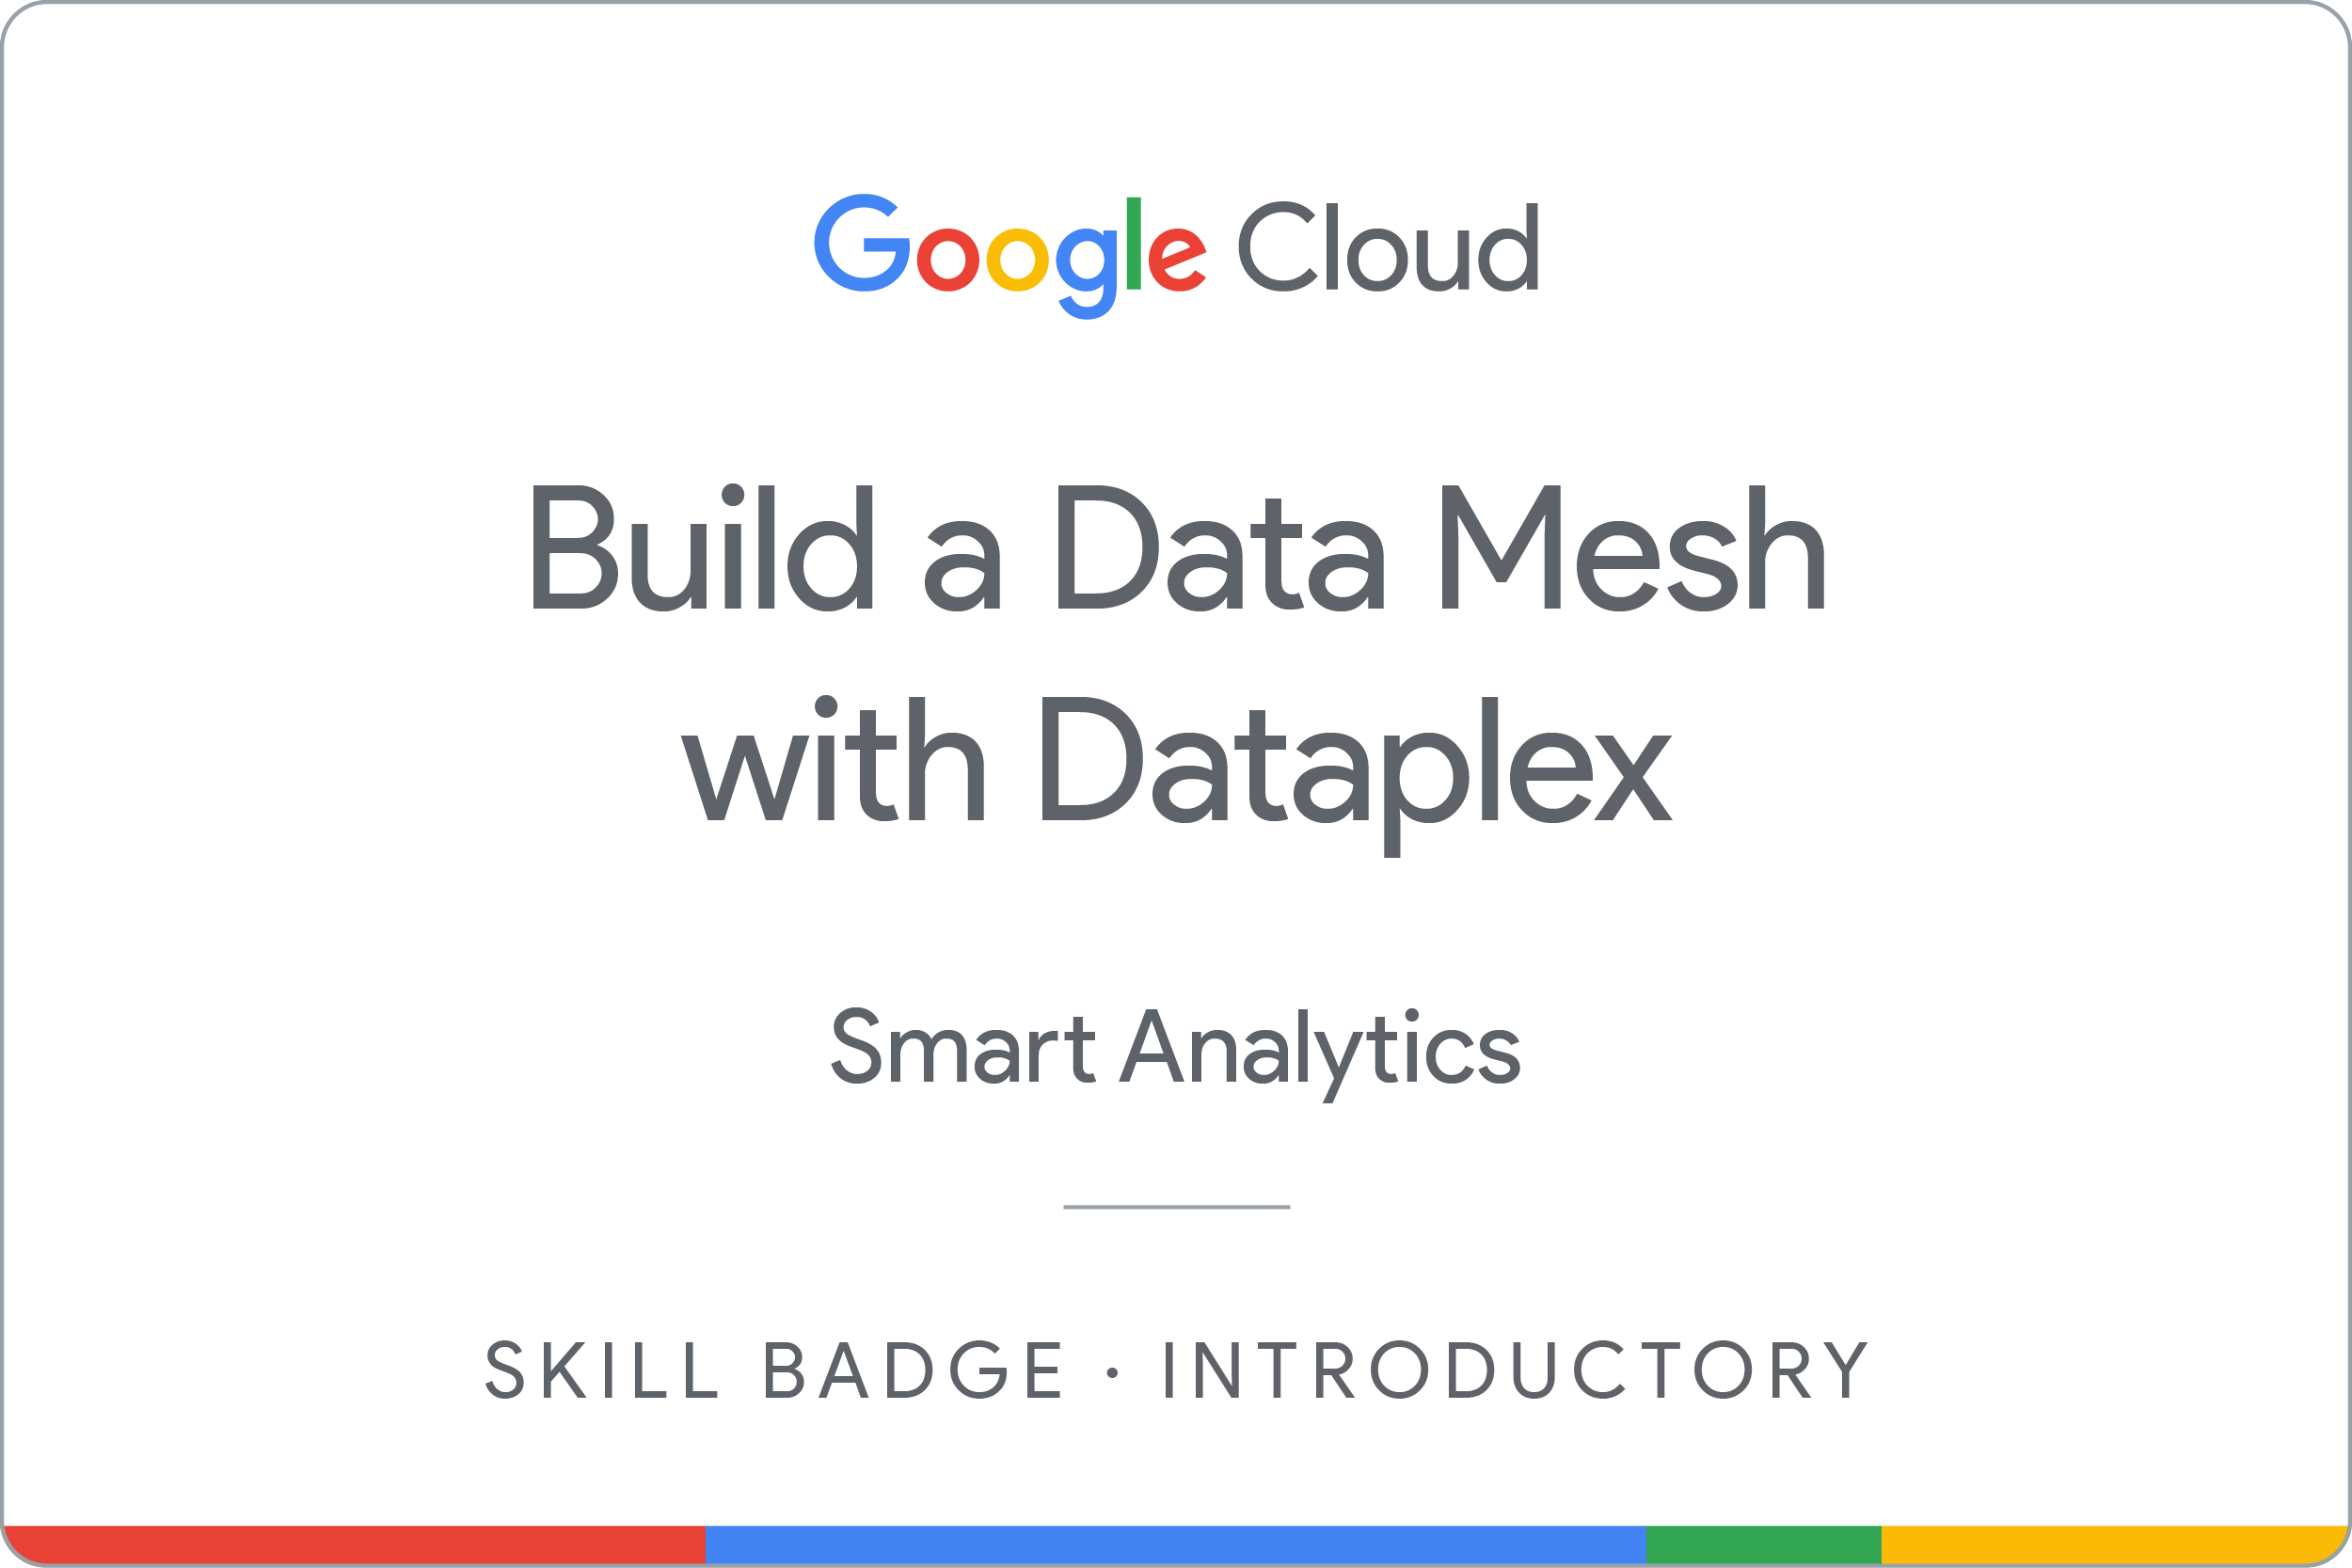 Build a Data Mesh with Dataplex badge